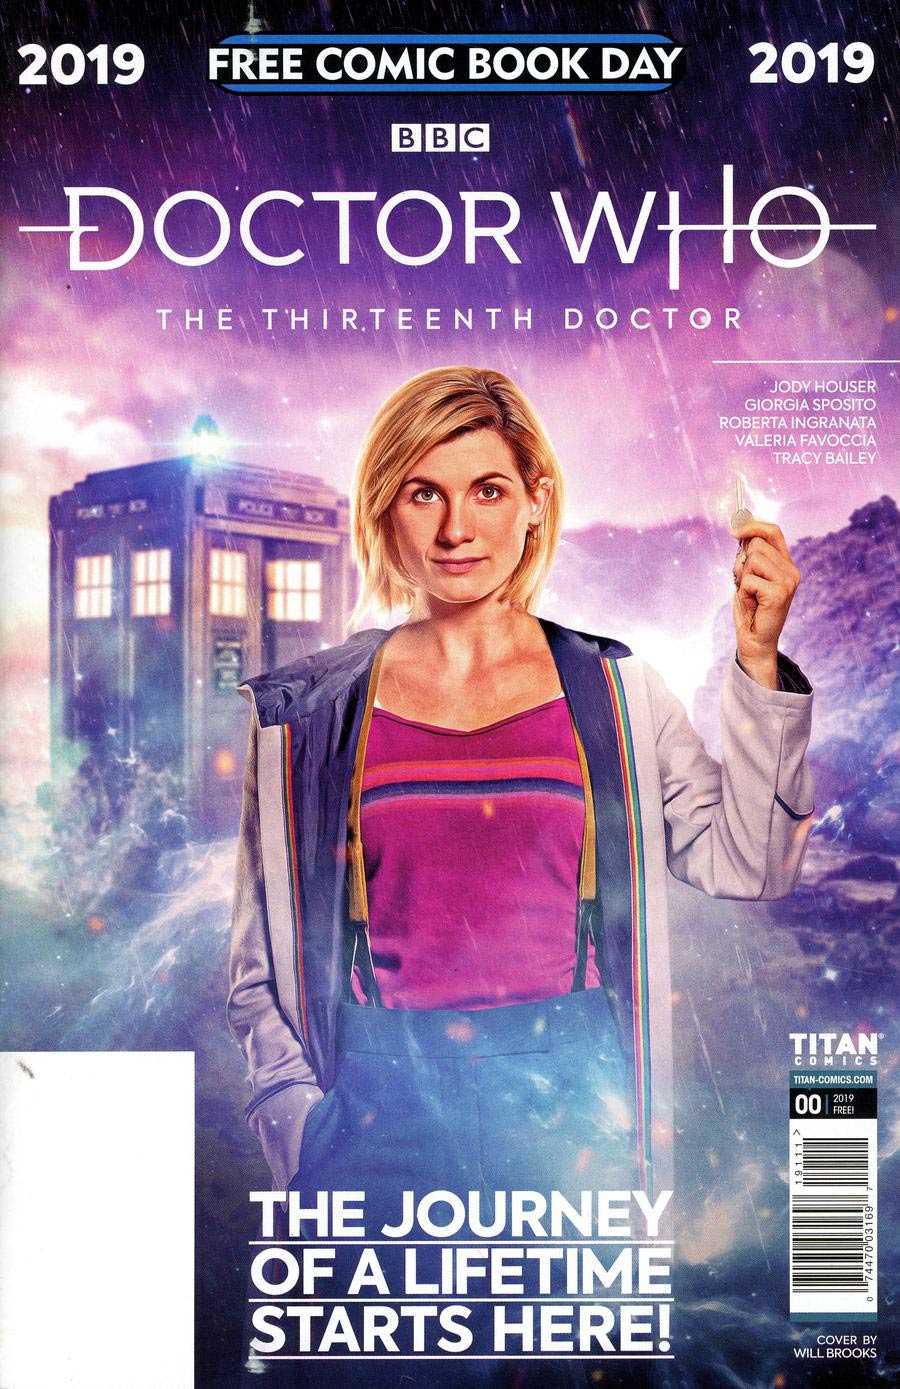 Doctor Who 13th Doctor FCBD 2019